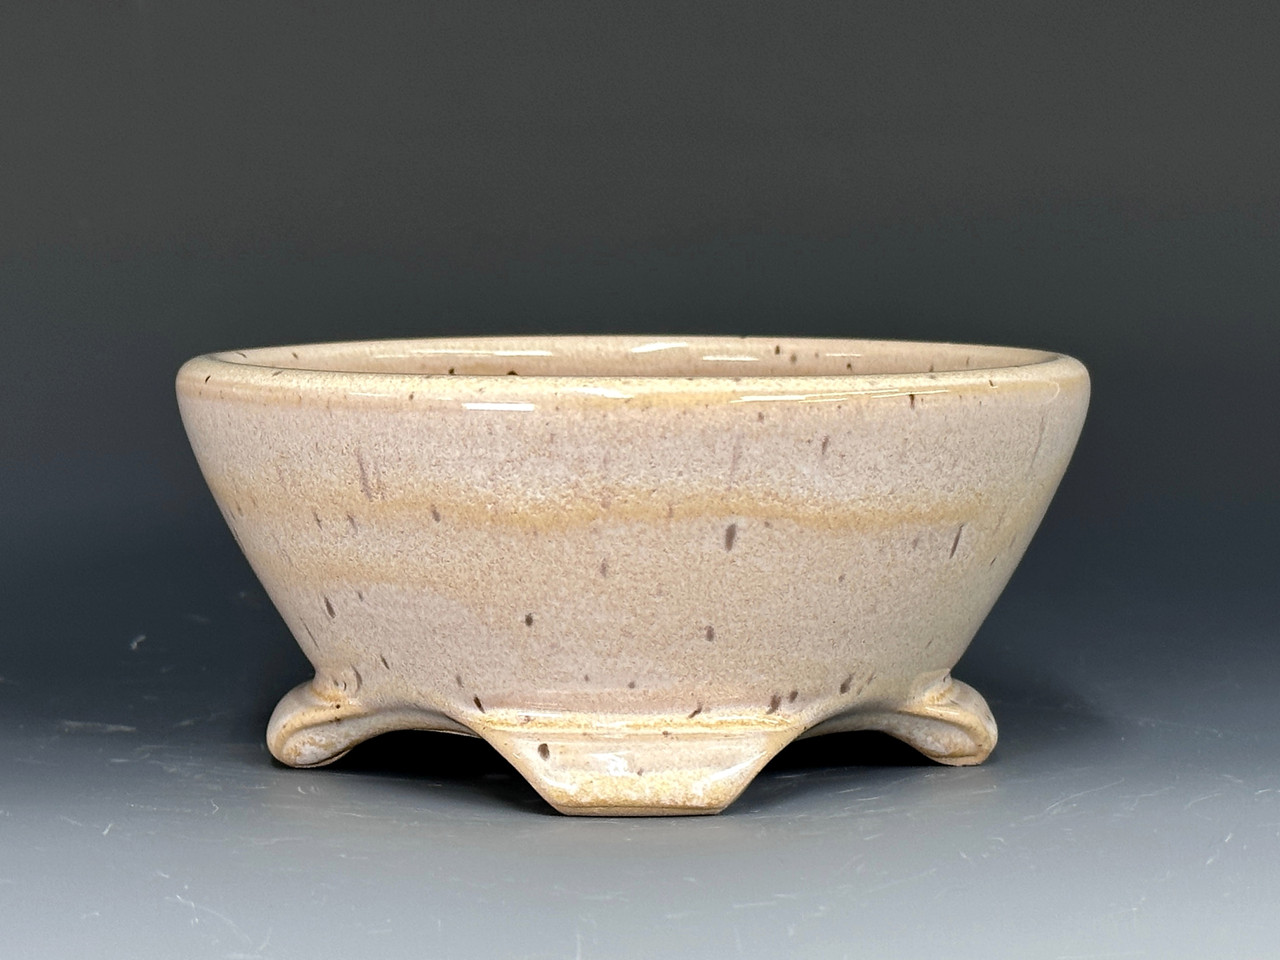 Ceramic Bonsai Pot/Saucer - Mustard Oval - 6 1/8 x 4 1/2 x 2 with Felt Feet